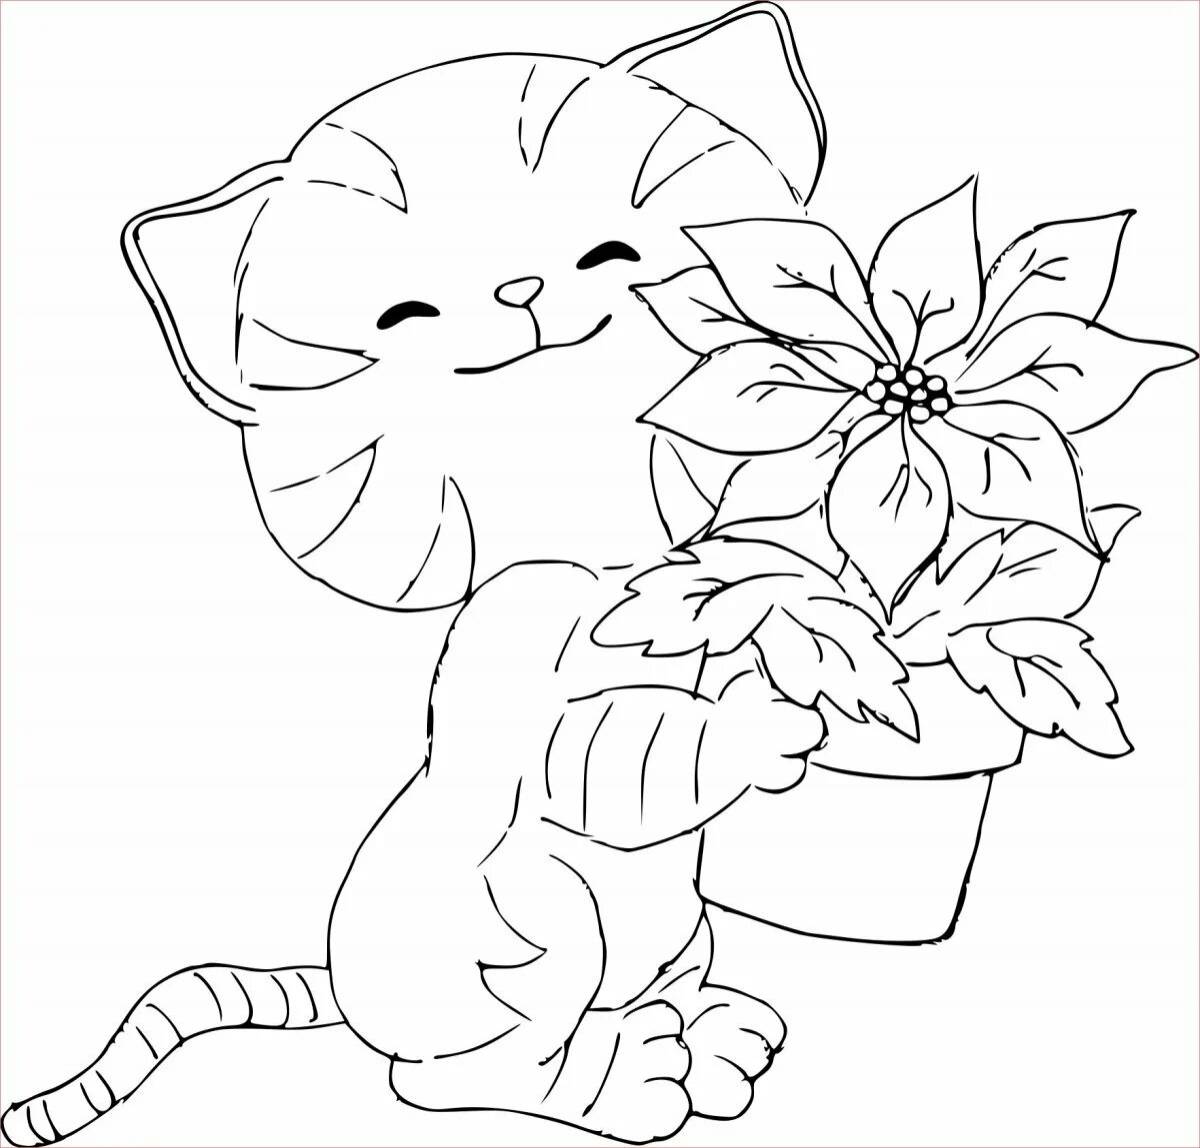 Раскраска яркий котенок с цветами